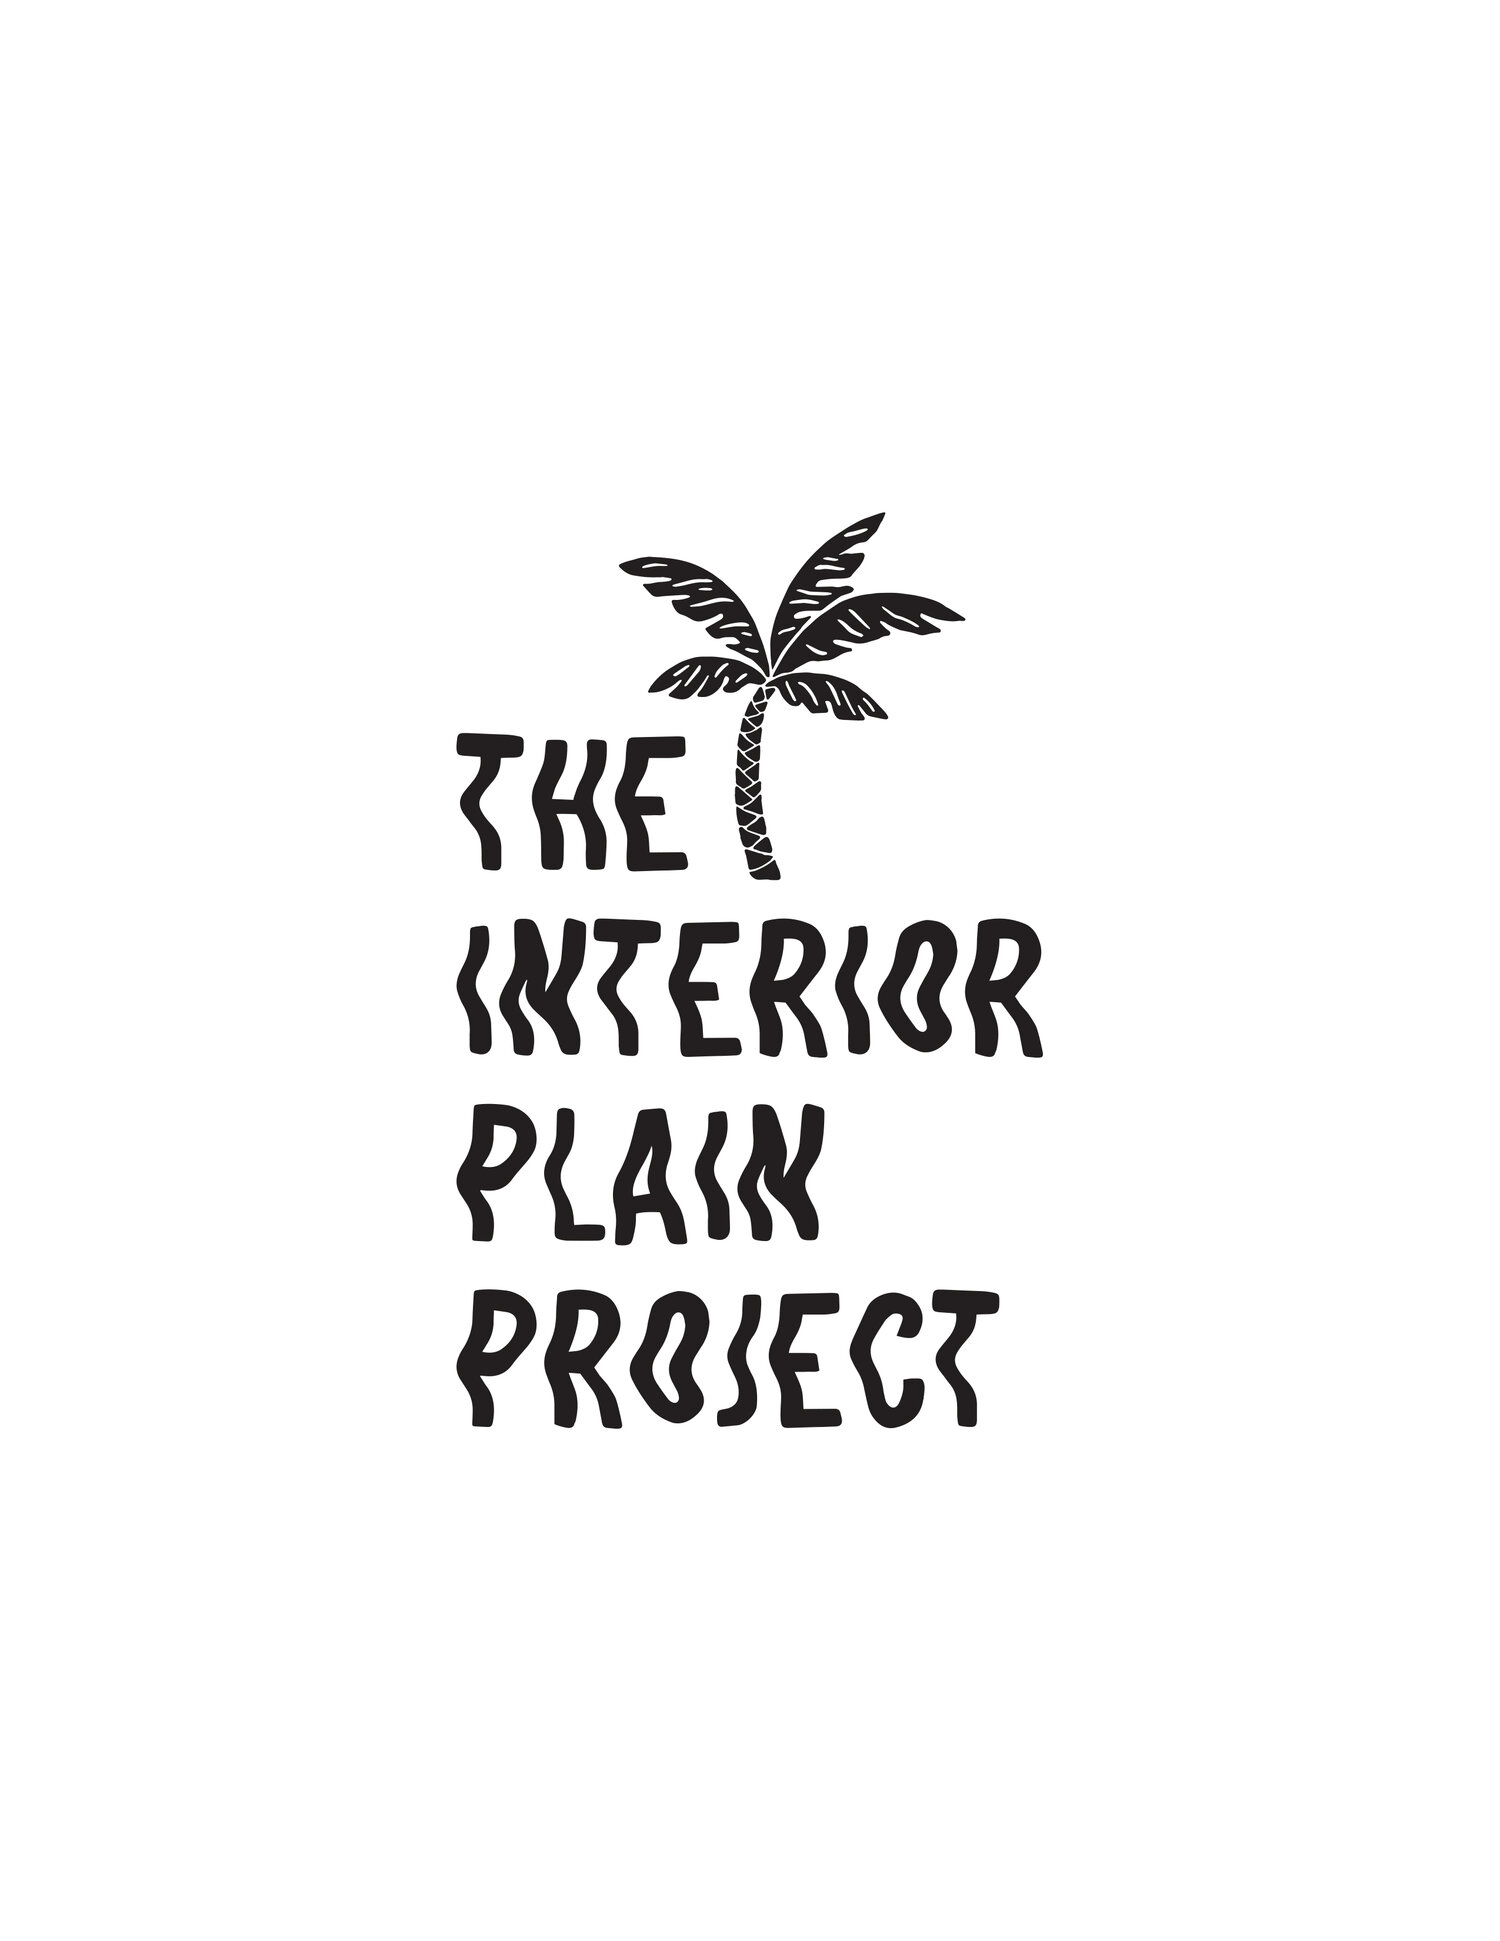 IPP Interior Plain project Harrow 152cm Sin Eater Collection 2018